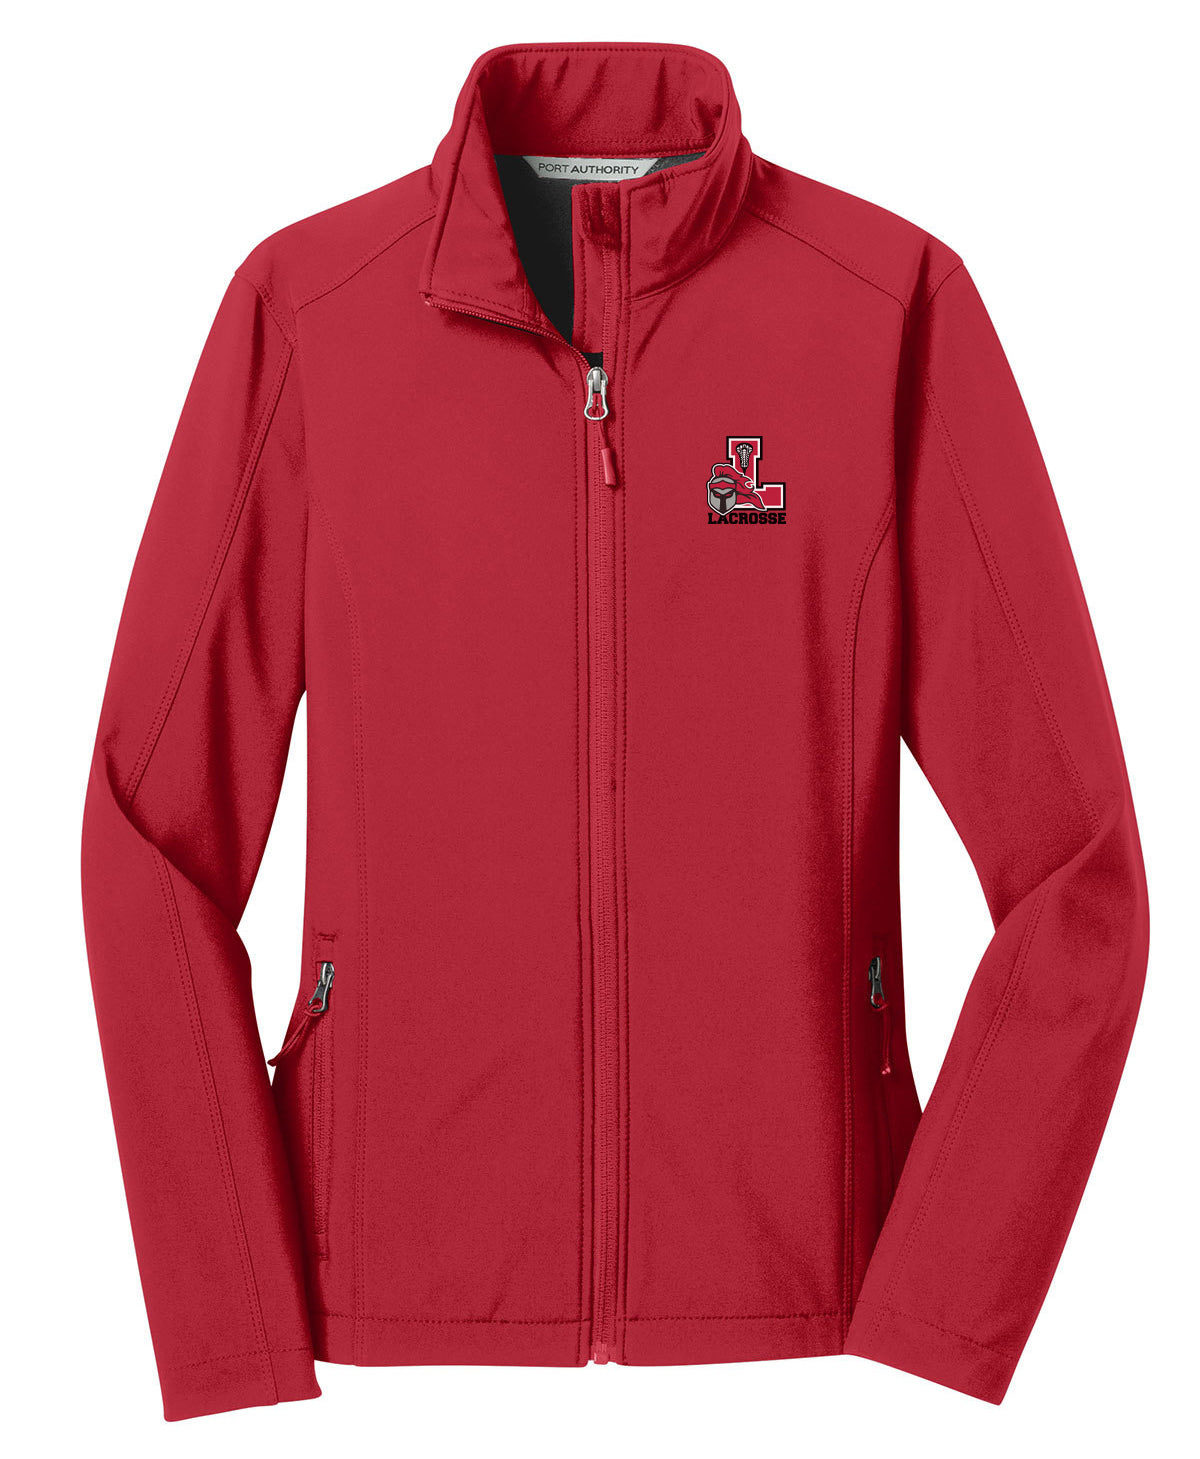 Lancaster Legends Lacrosse Red Women's Soft Shell Jacket